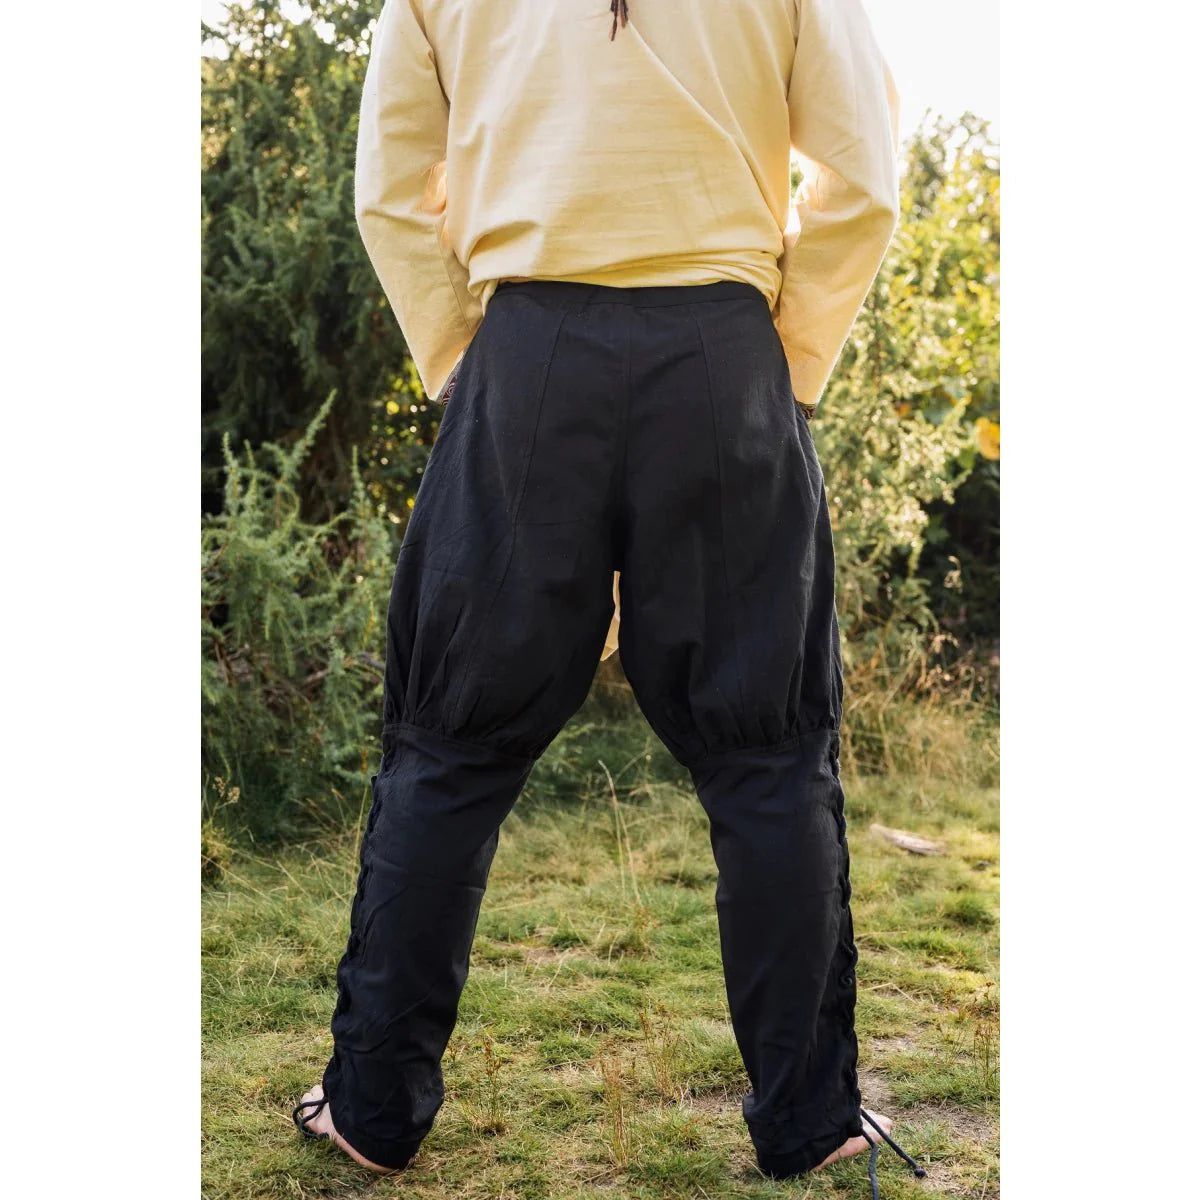 Premium Viking Pants - Authentic Cut in Cotton with Leg Lacing (Black)